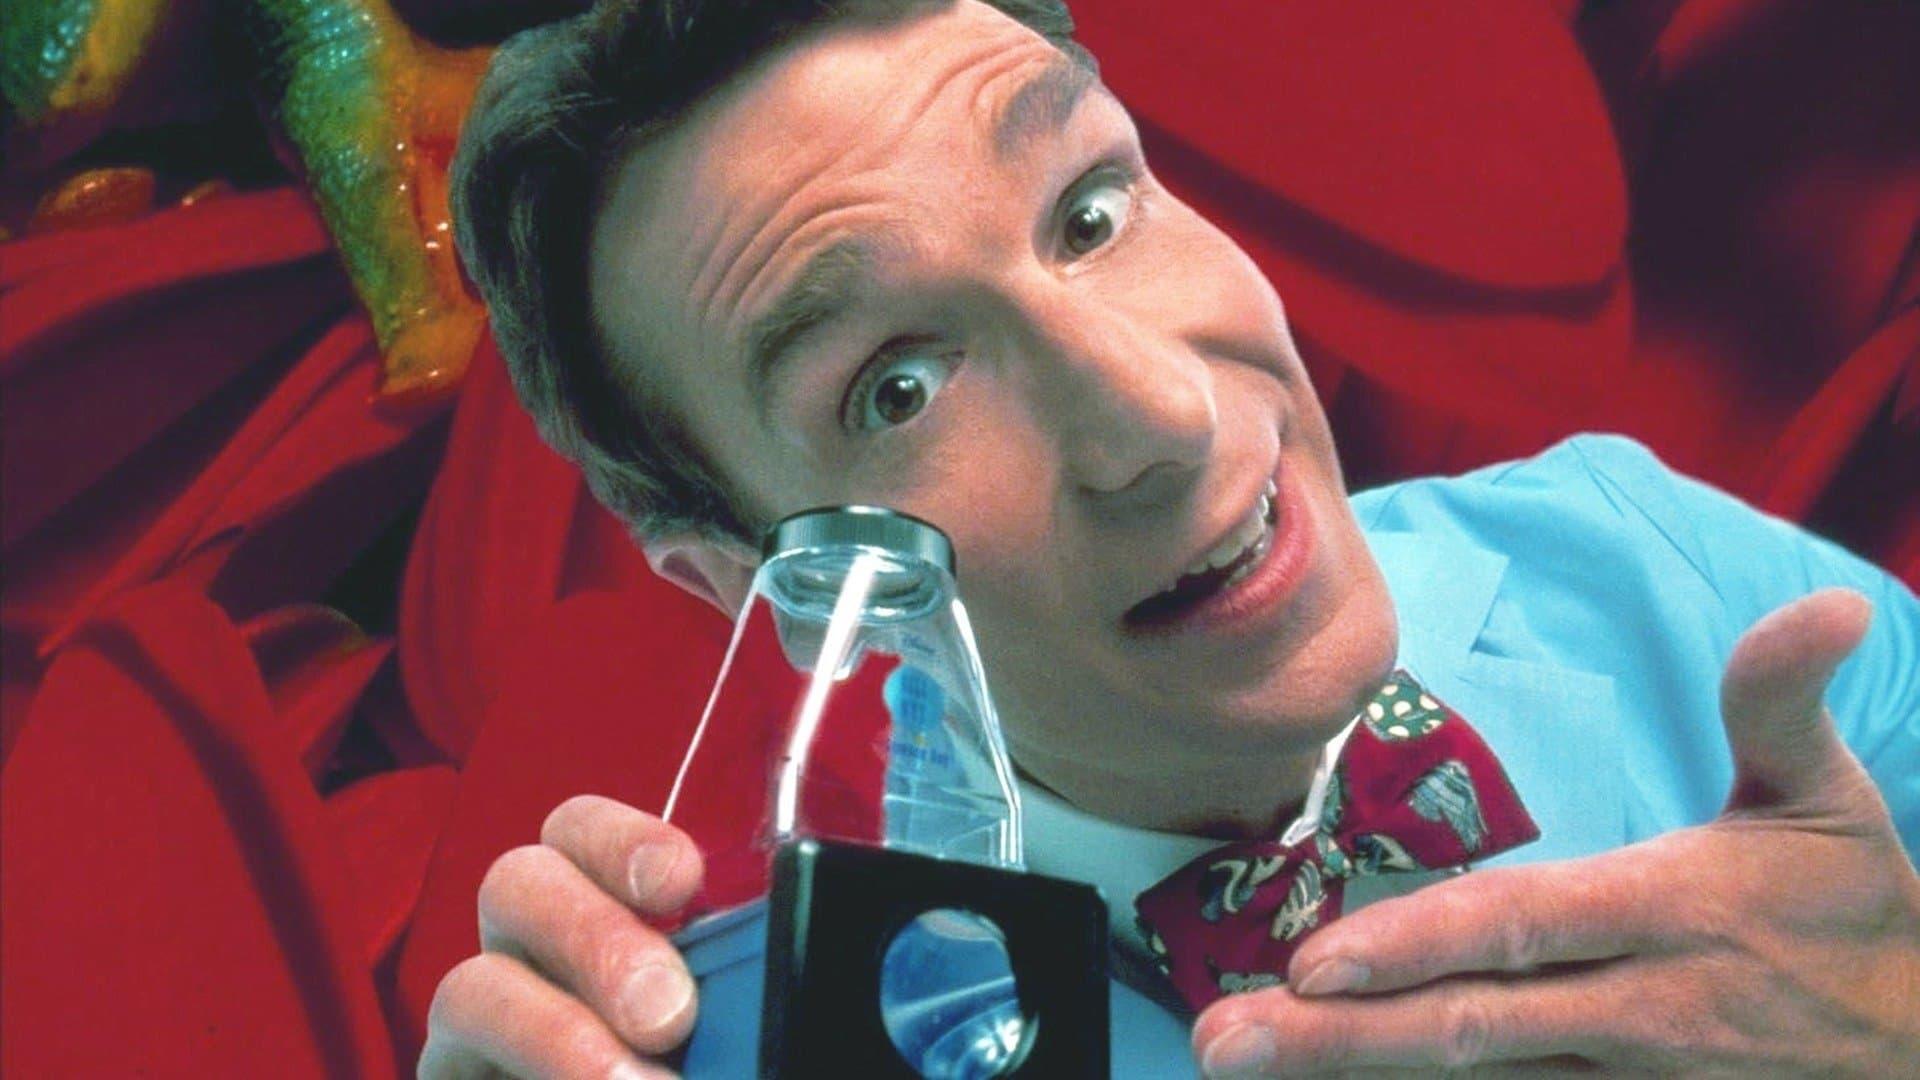 Bill Nye the Science Guy backdrop